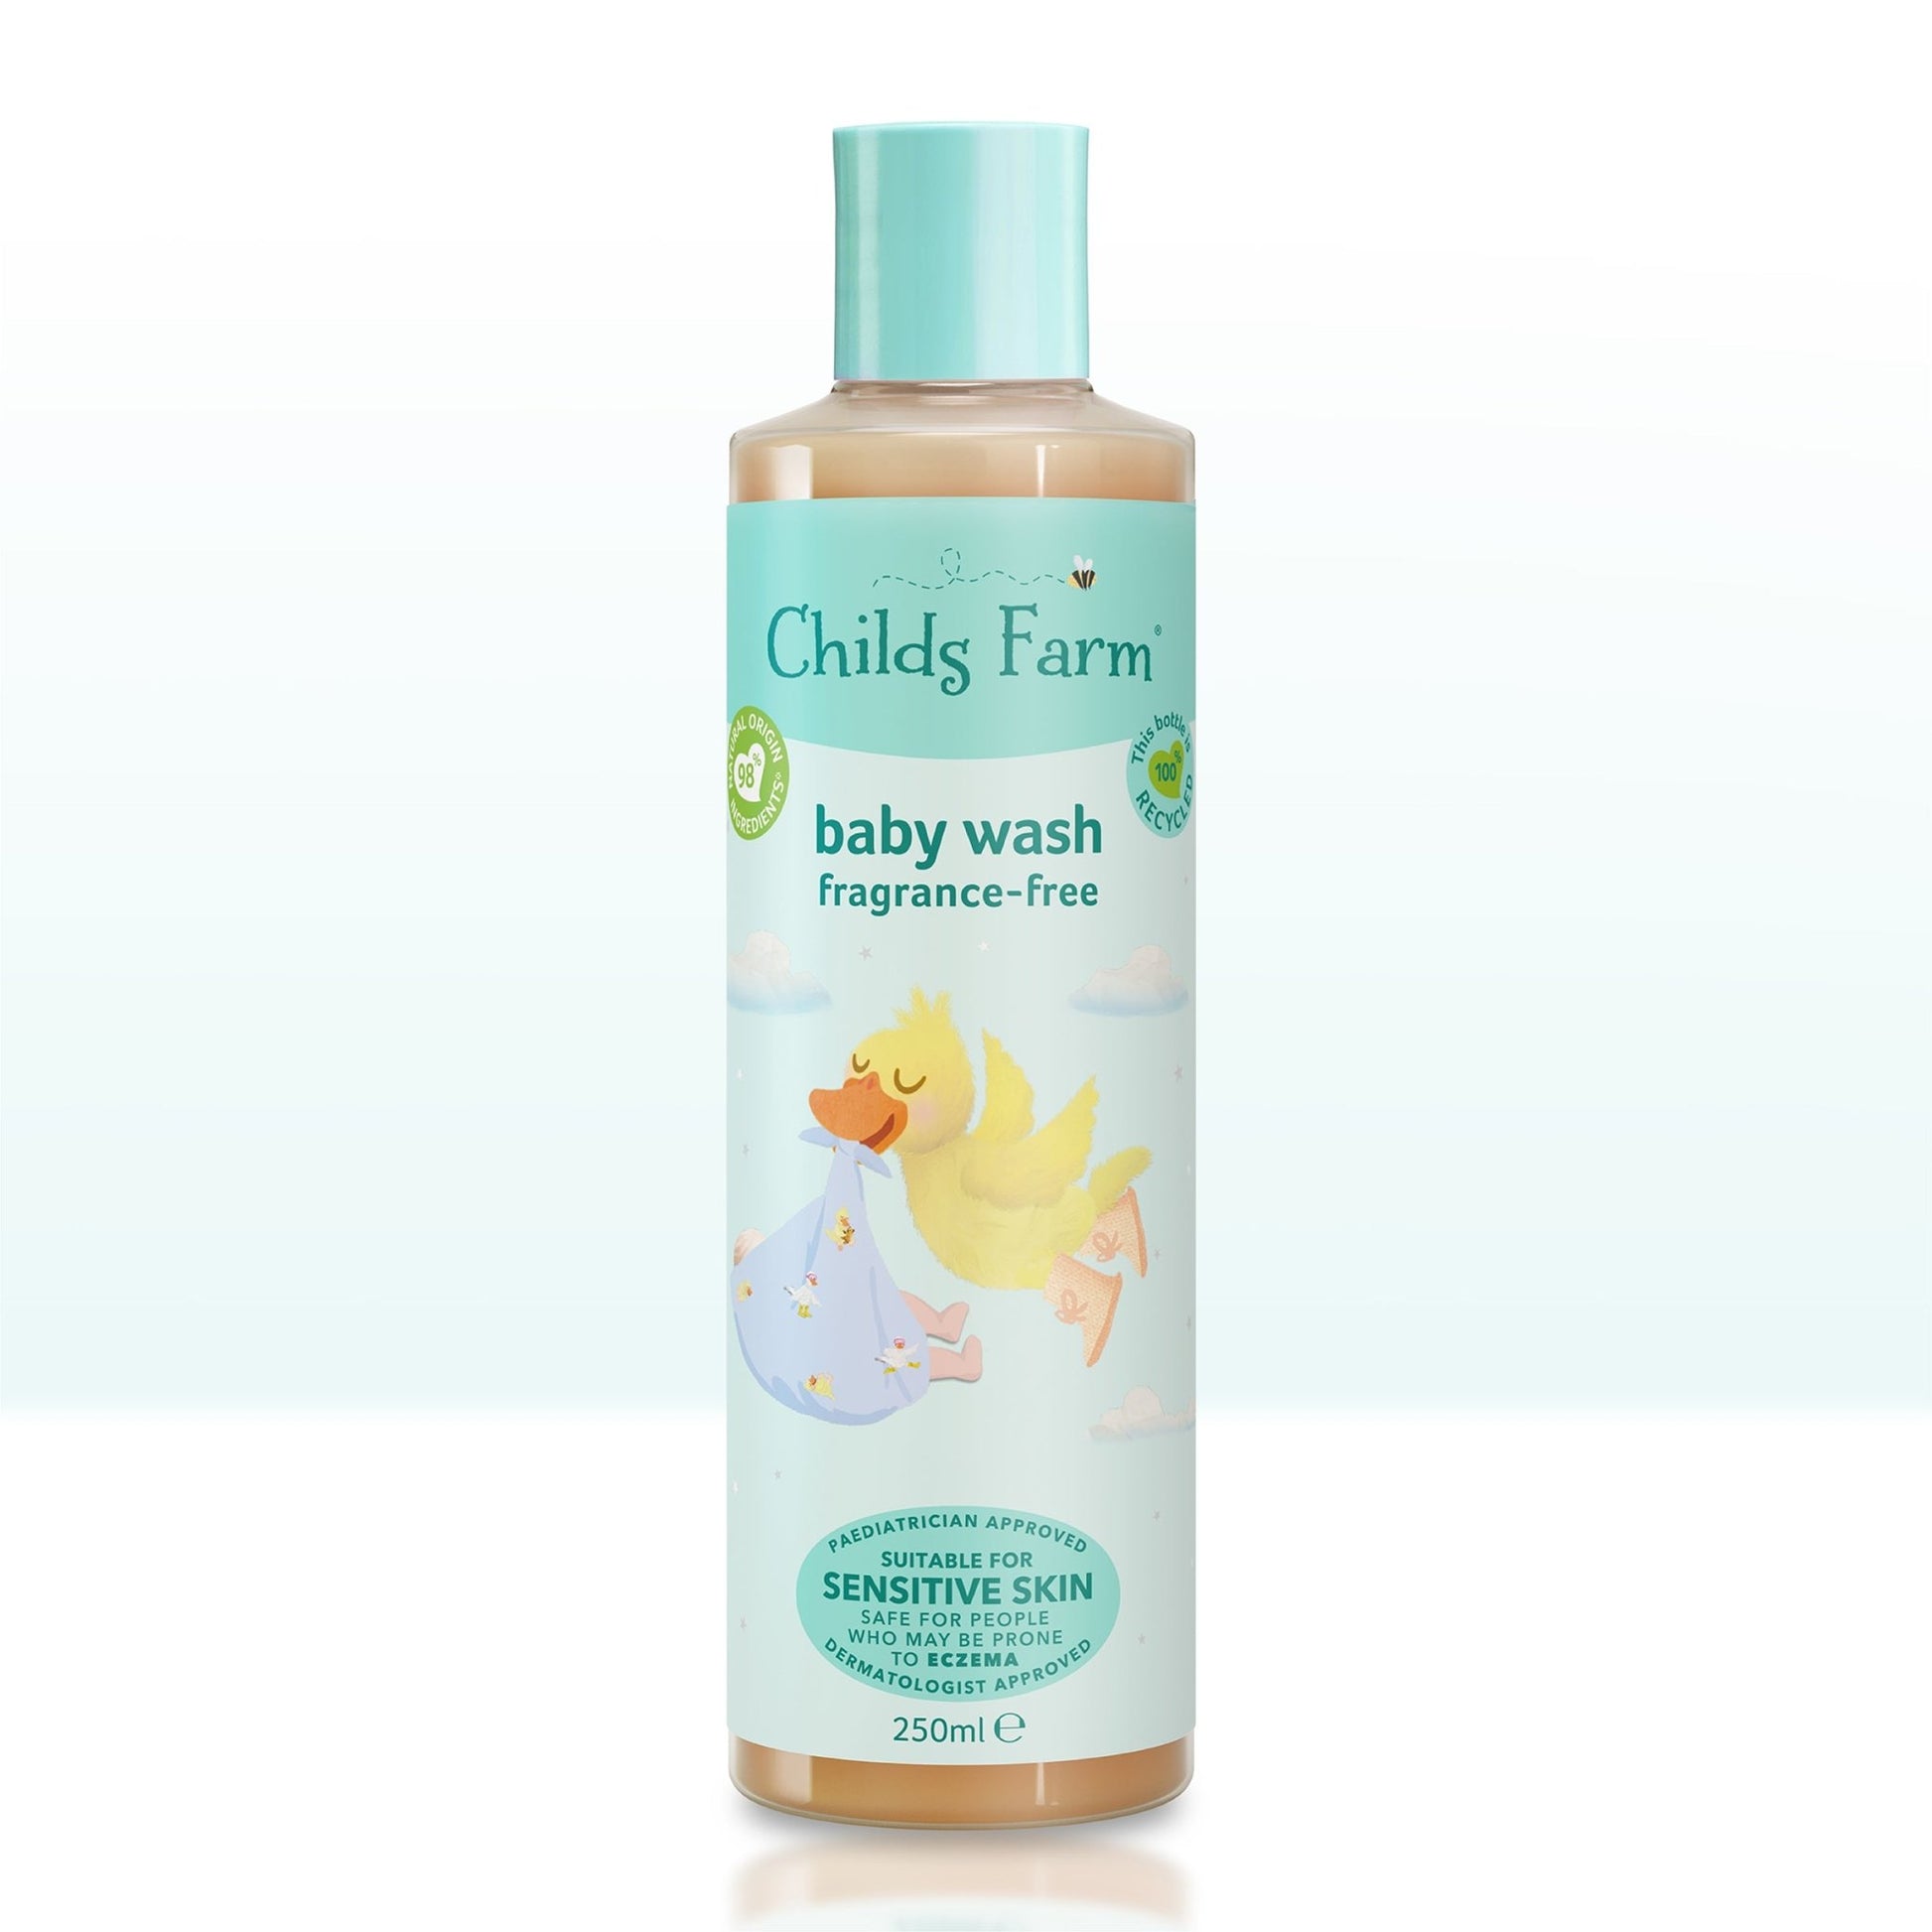 Childs Farm baby wash fragrance-free